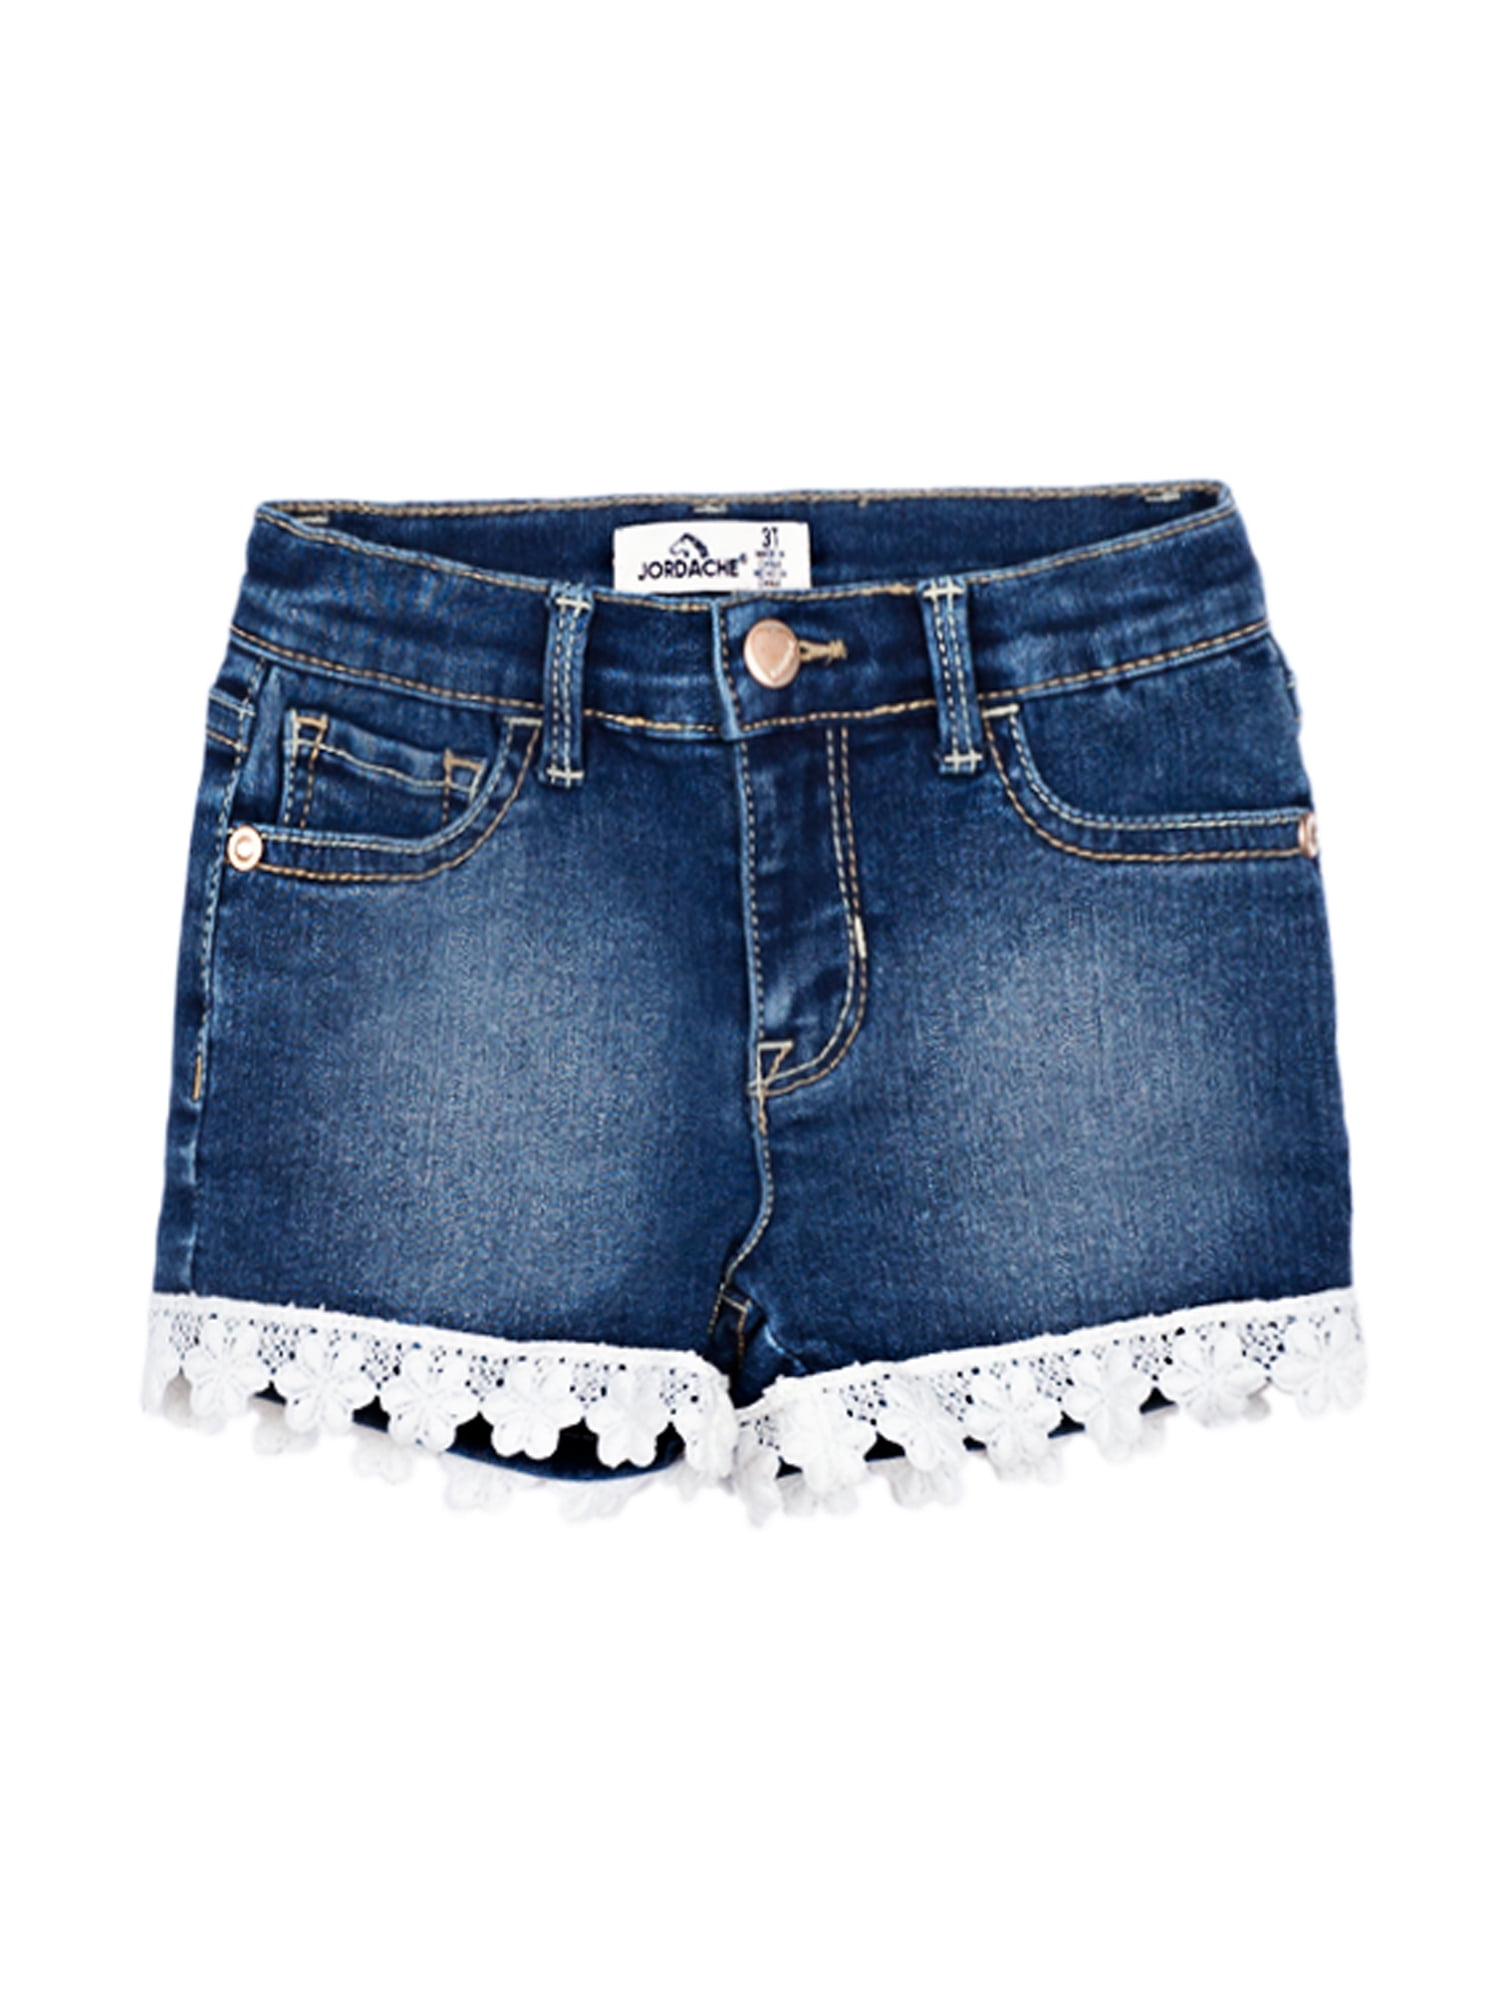 Jordache Lace Trim Denim Shorts (Toddler Girls) - Walmart.com